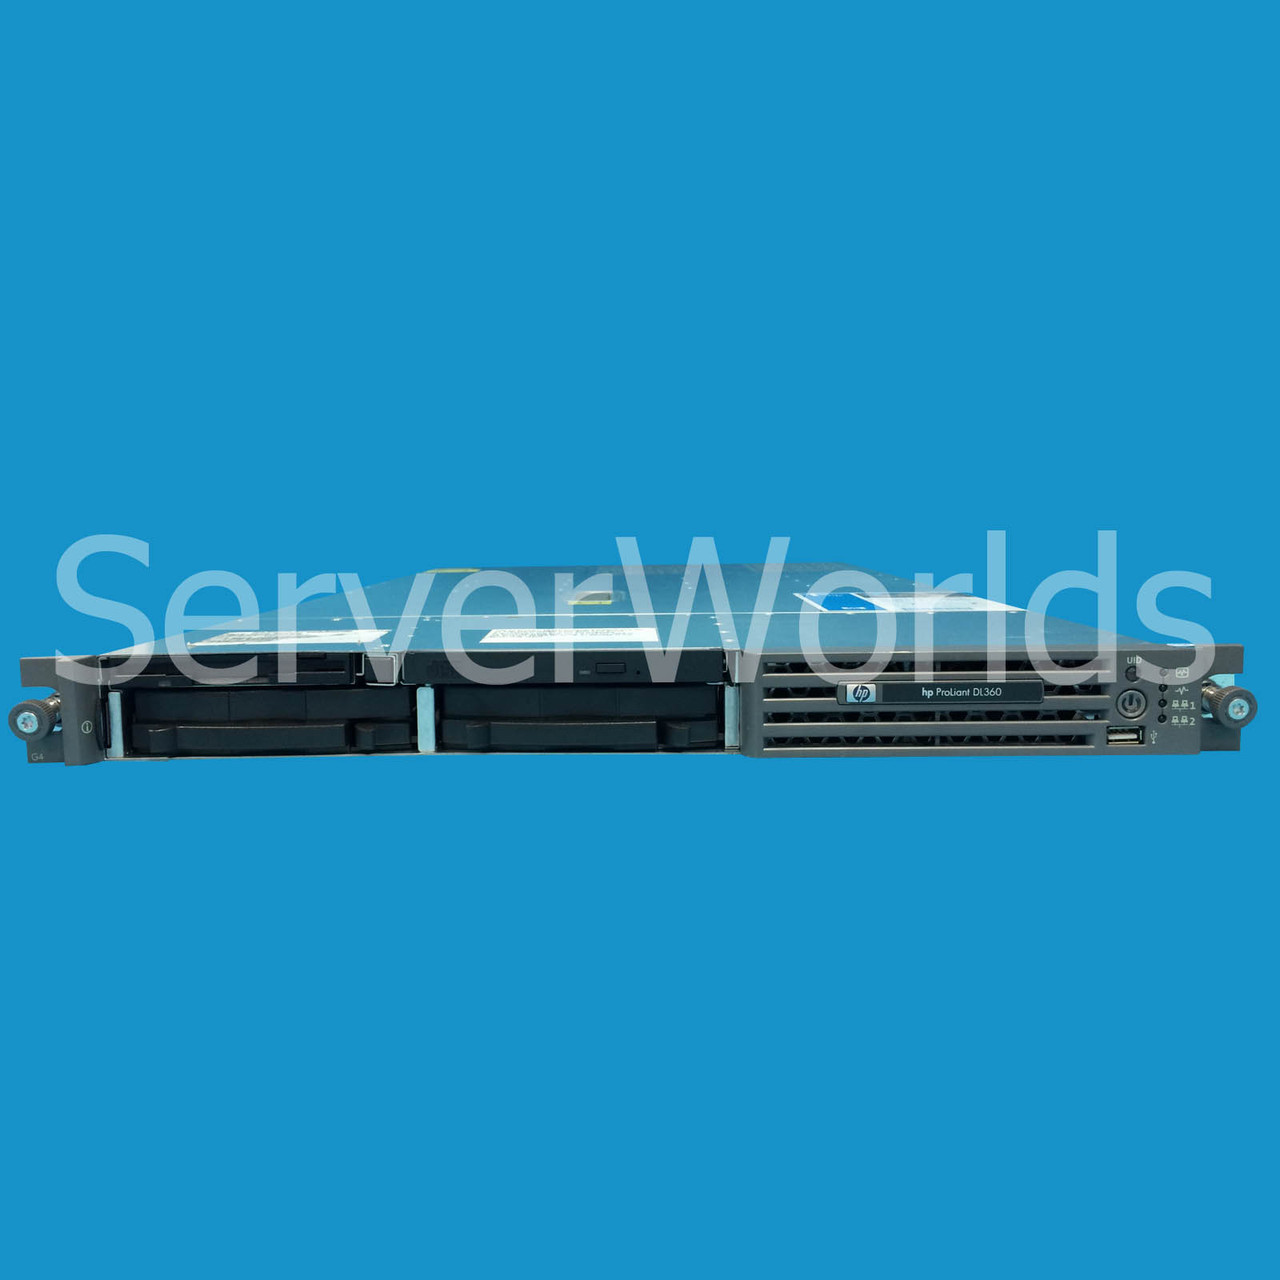 geur escaleren aankleden HP 354572-001 | Refurbished HP DL360 G4 Server | Used HP DL360 G4 Server -  Serverworlds